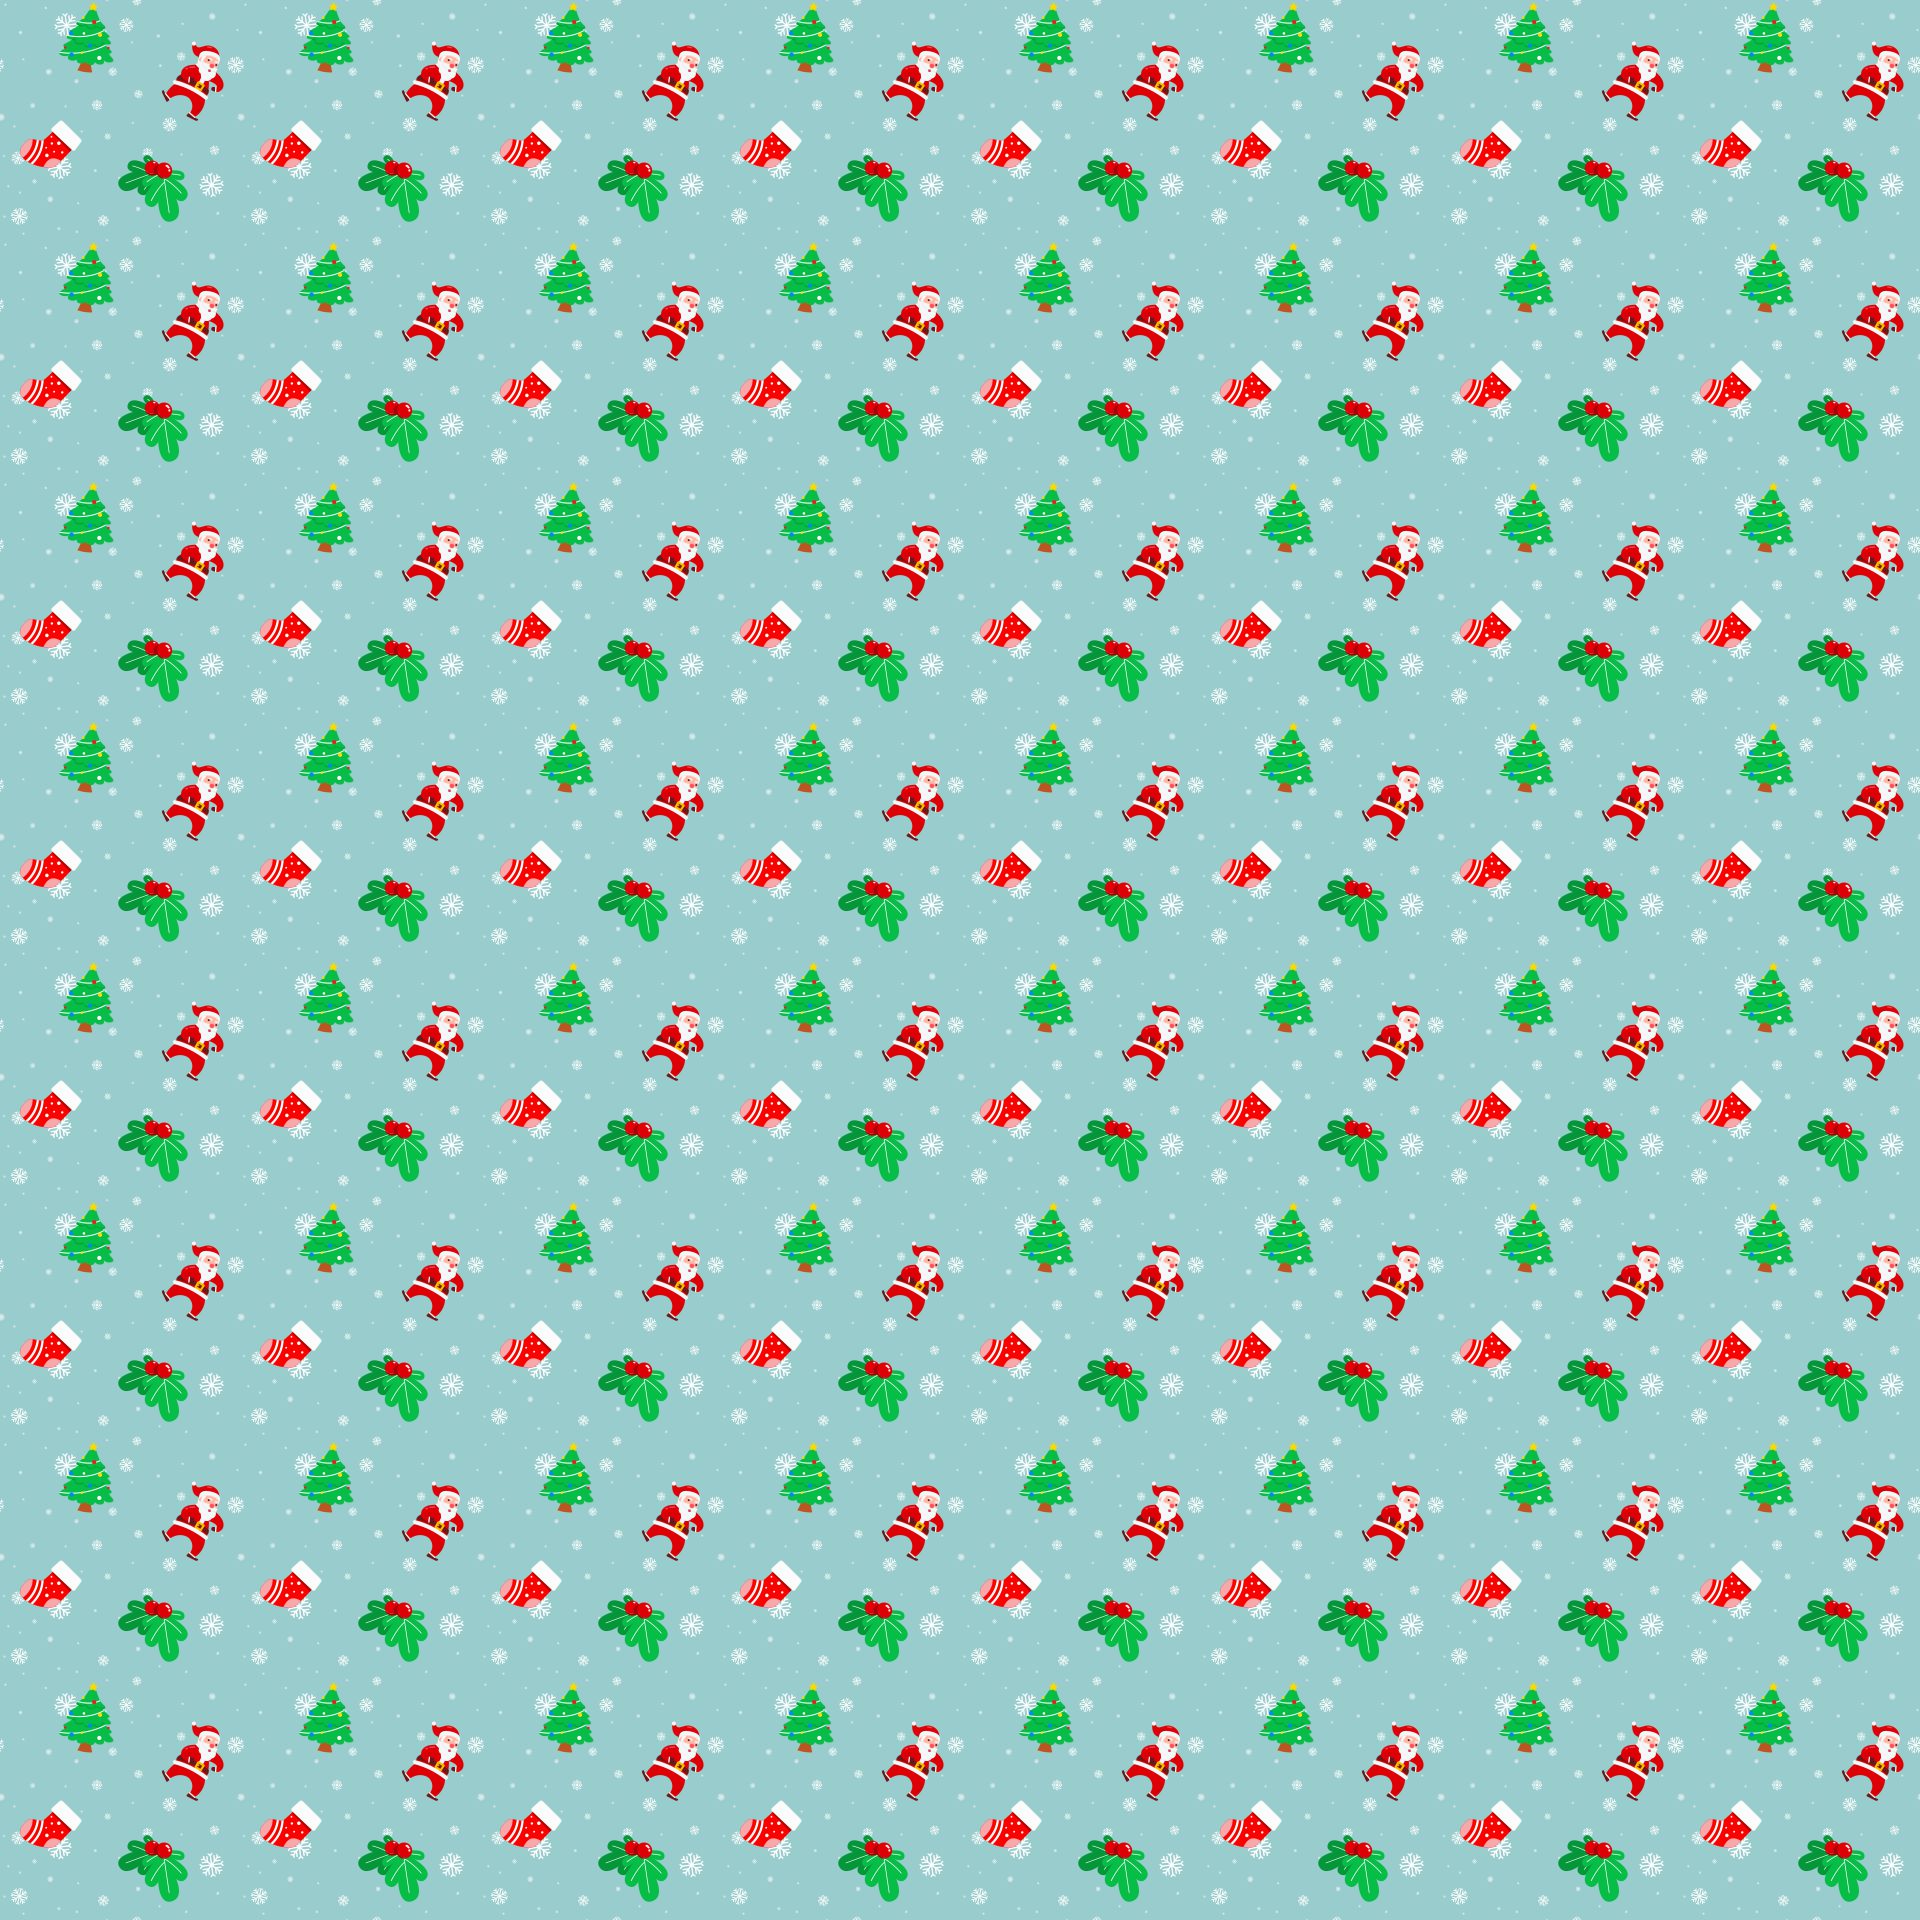 Printable Christmas Tree Templates & Santa Claus Patterns